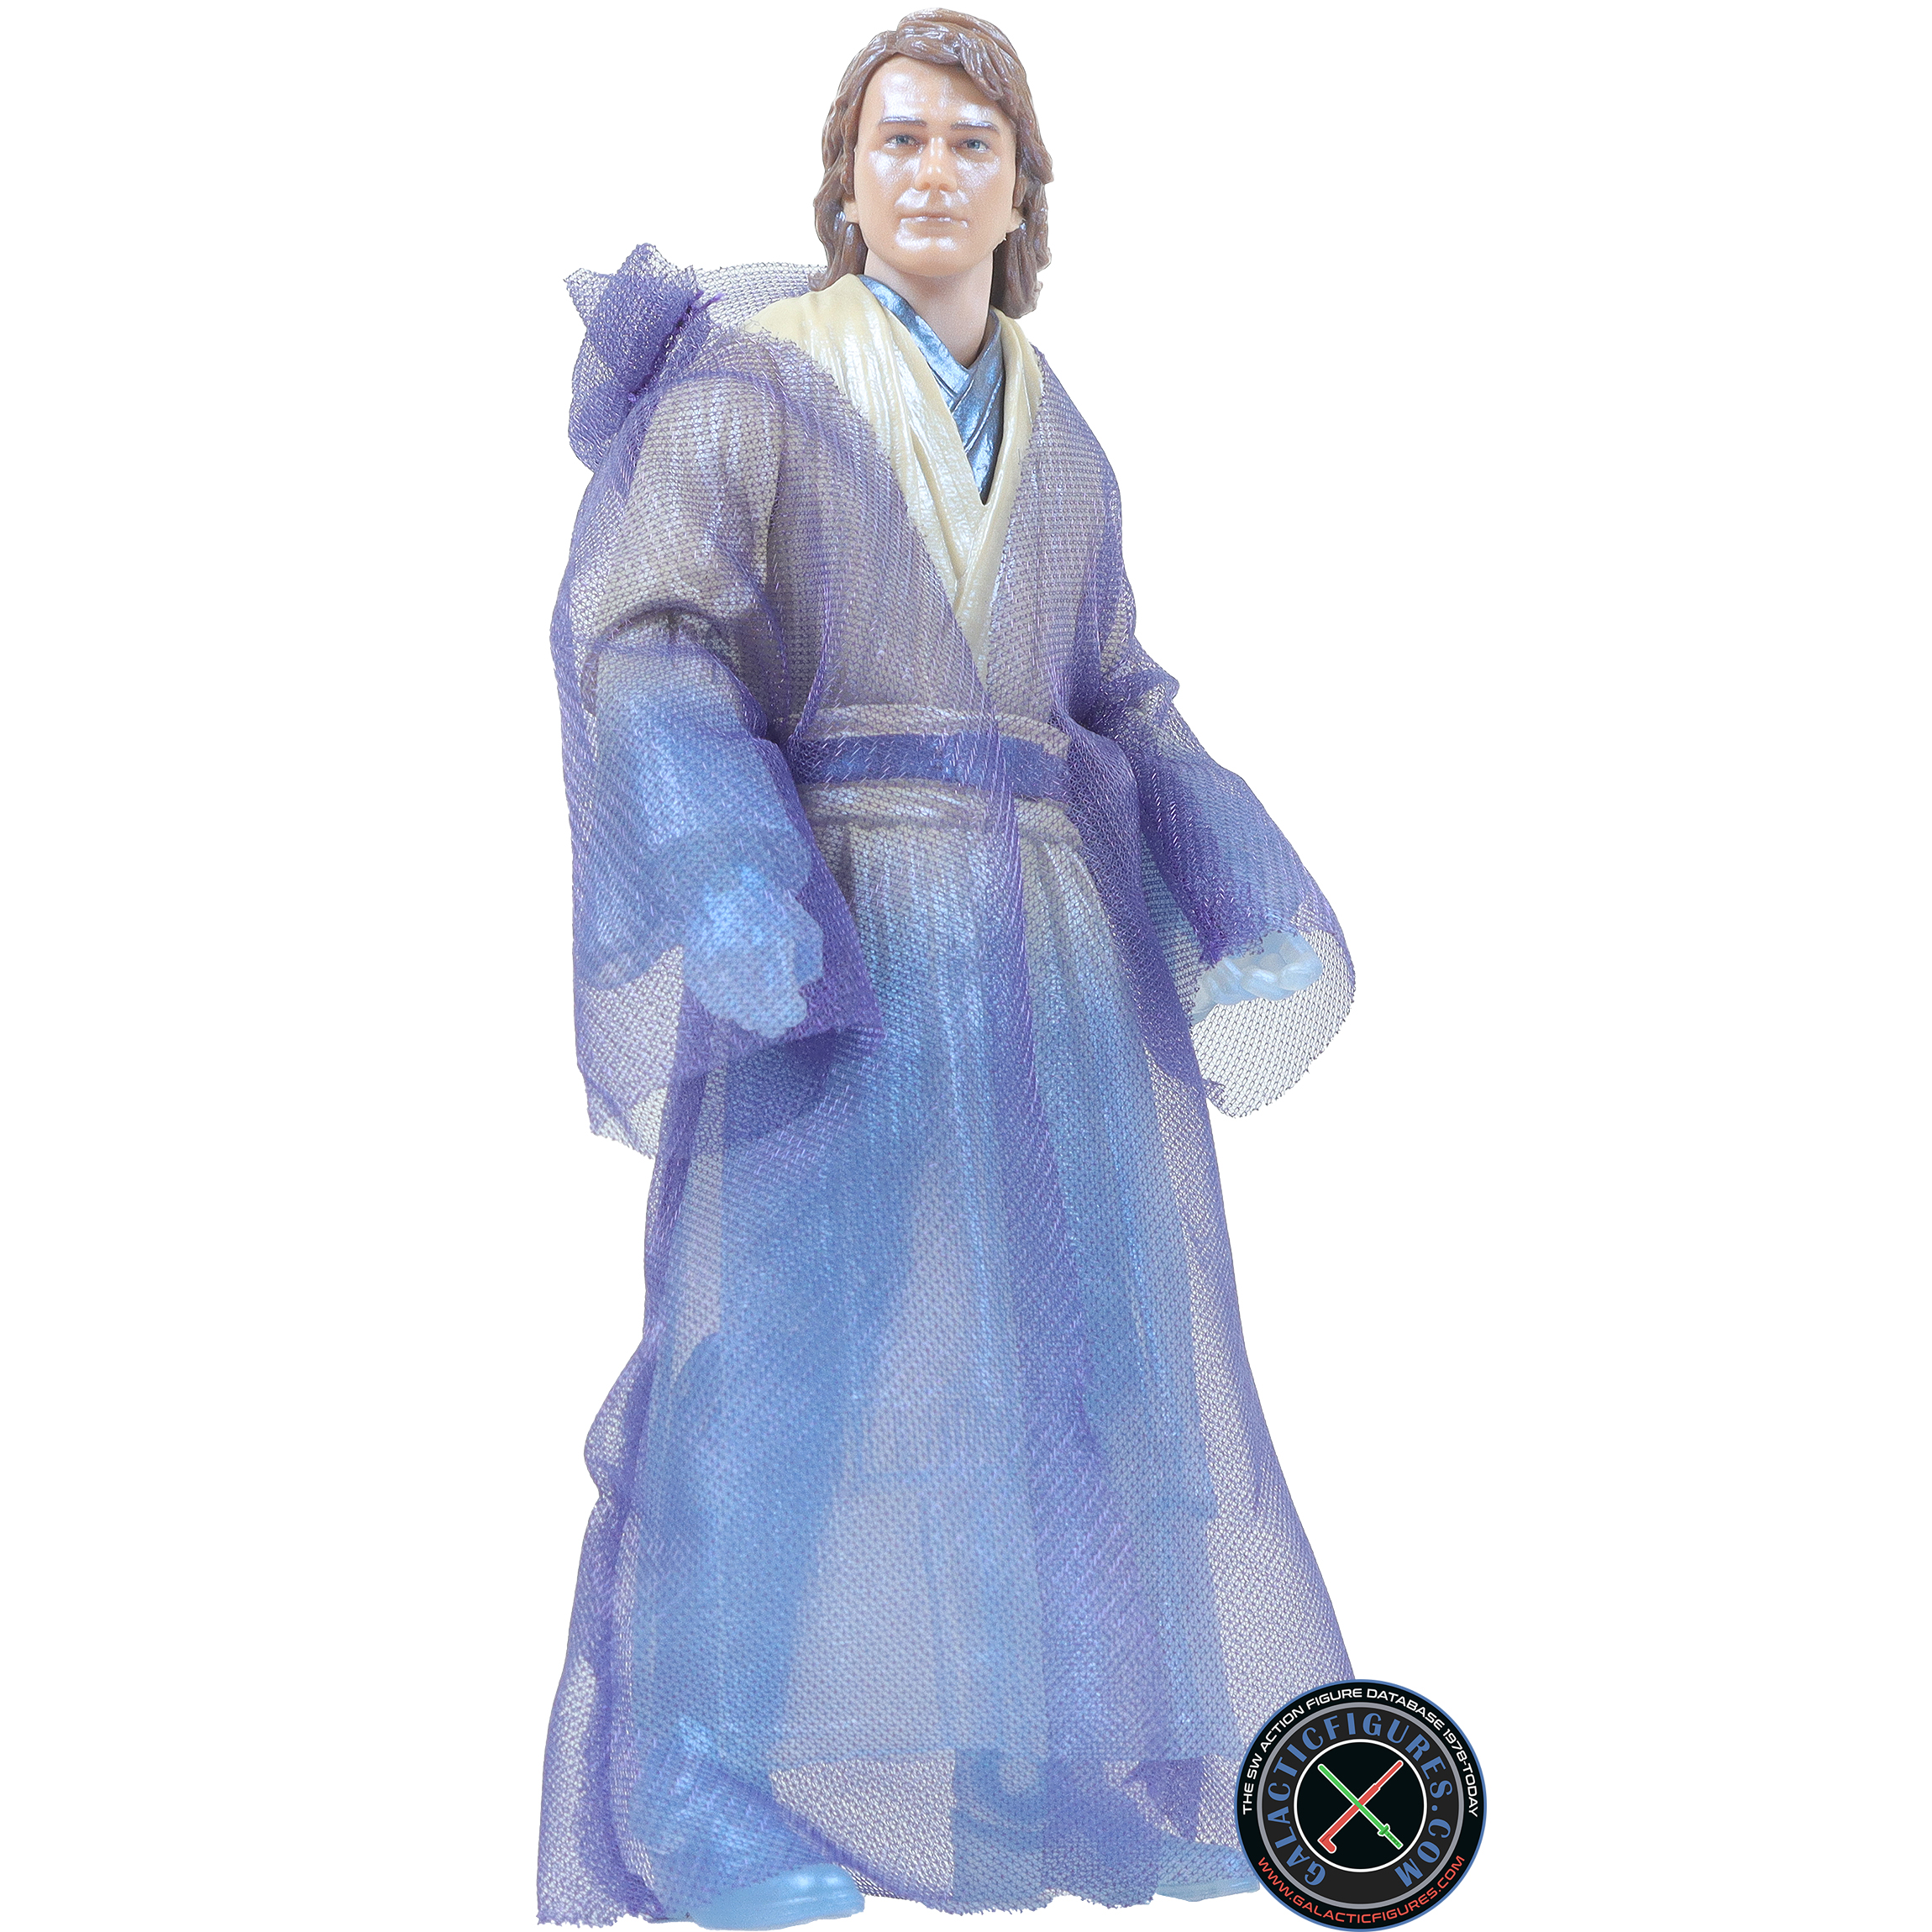 Anakin Skywalker Force Spirit 3-Pack